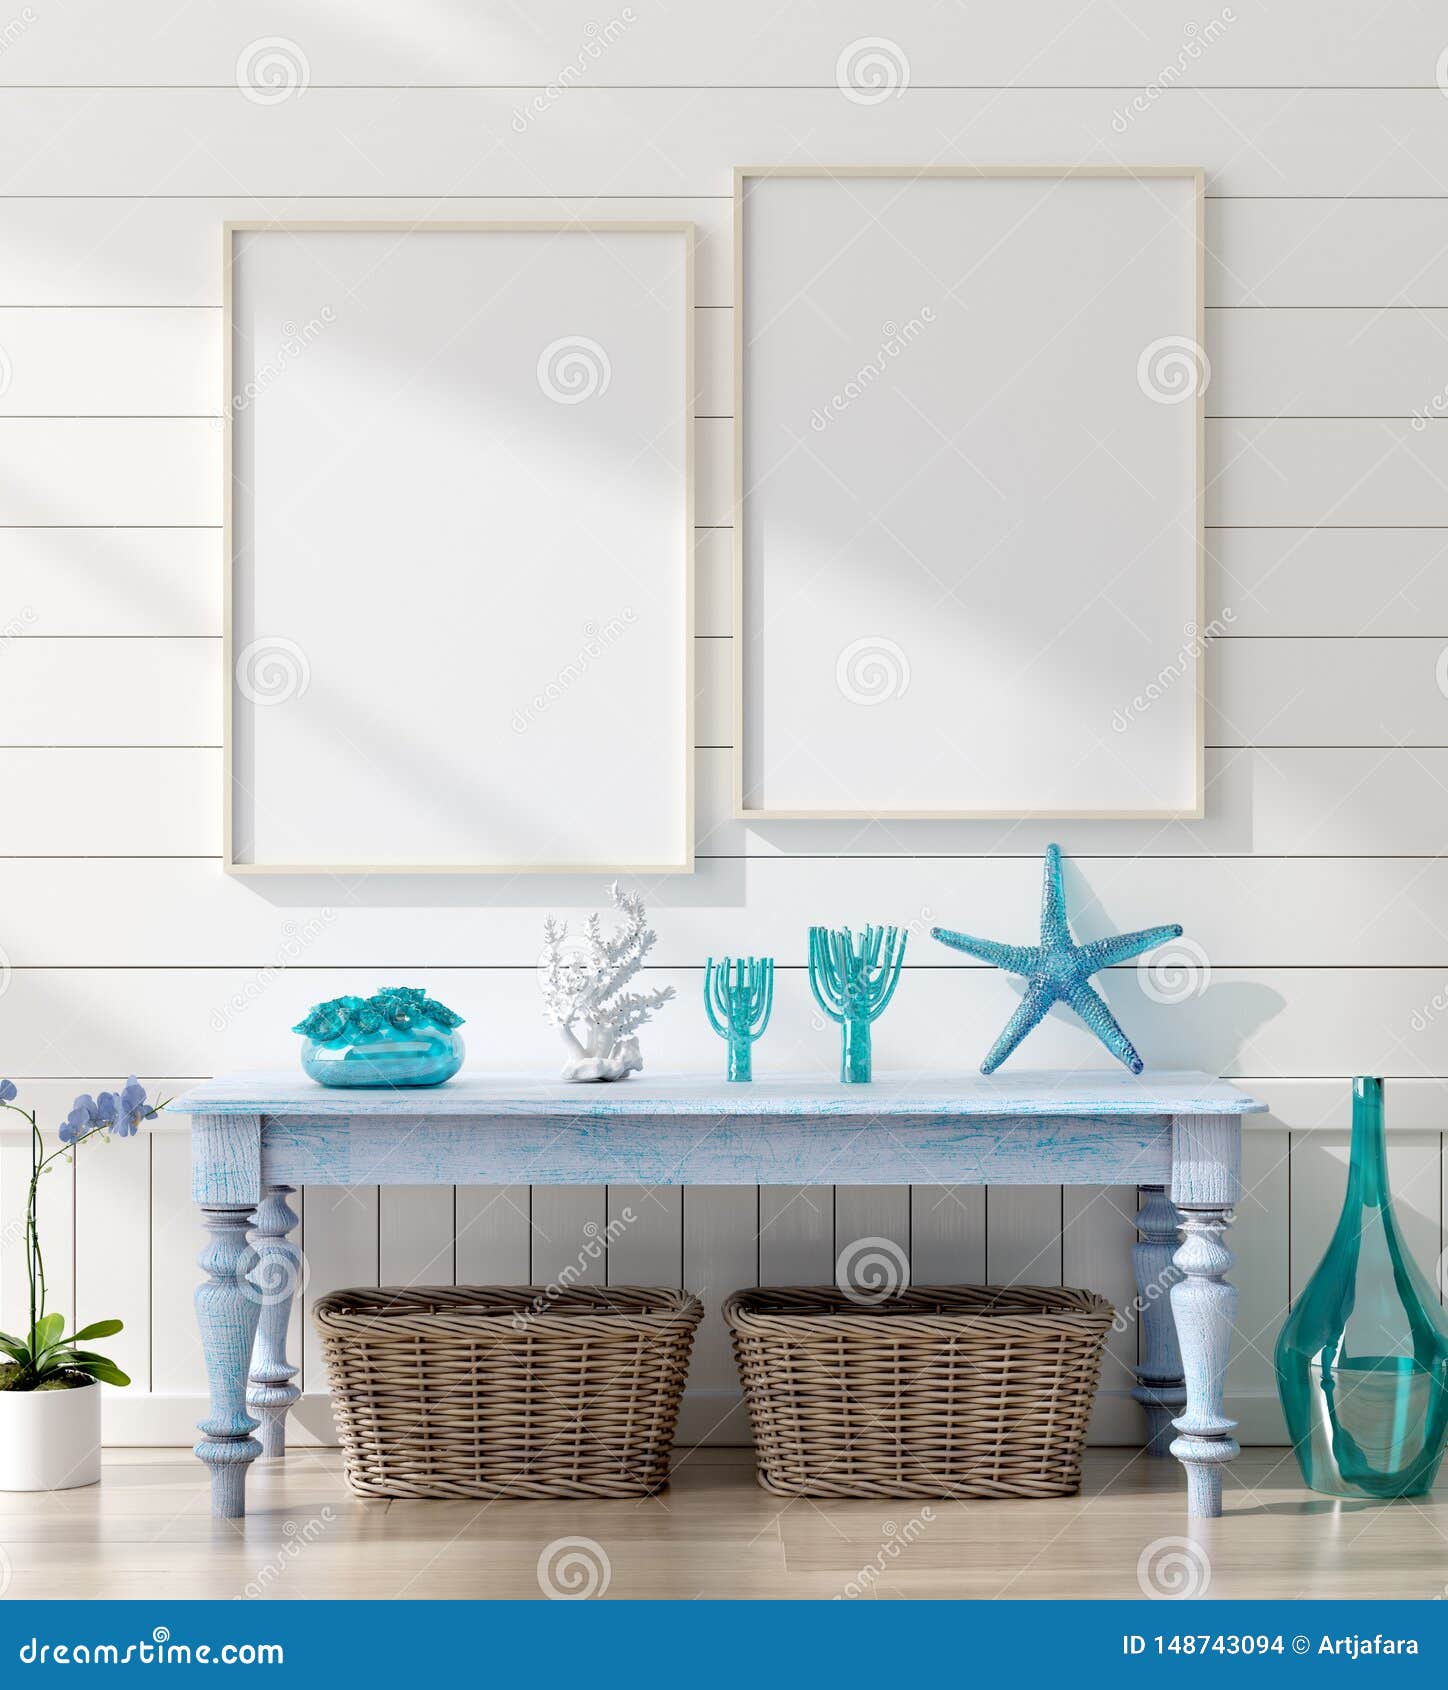 https://thumbs.dreamstime.com/z/mock-up-frame-bedroom-interior-marine-room-sea-decor-furniture-coastal-style-d-render-148743094.jpg